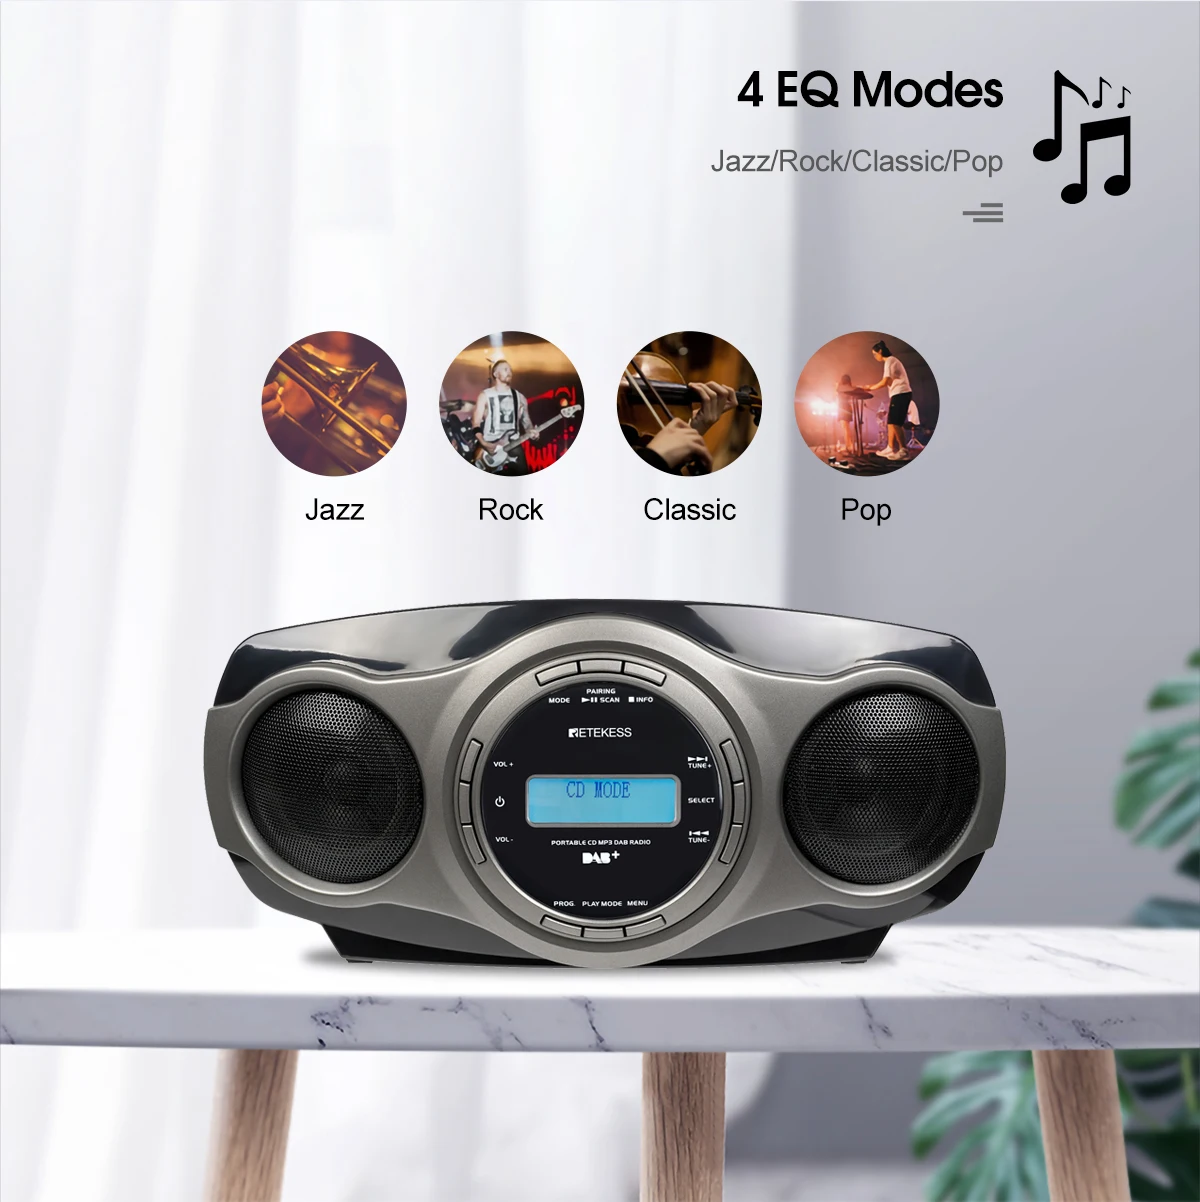 Retekess TR631 Tragbare CD Boombox Stereo Radio FM Bluetooth 3W Lautsprecher LCD Display Unterstützung Wecker MP3 AAC USB AUX Ältere